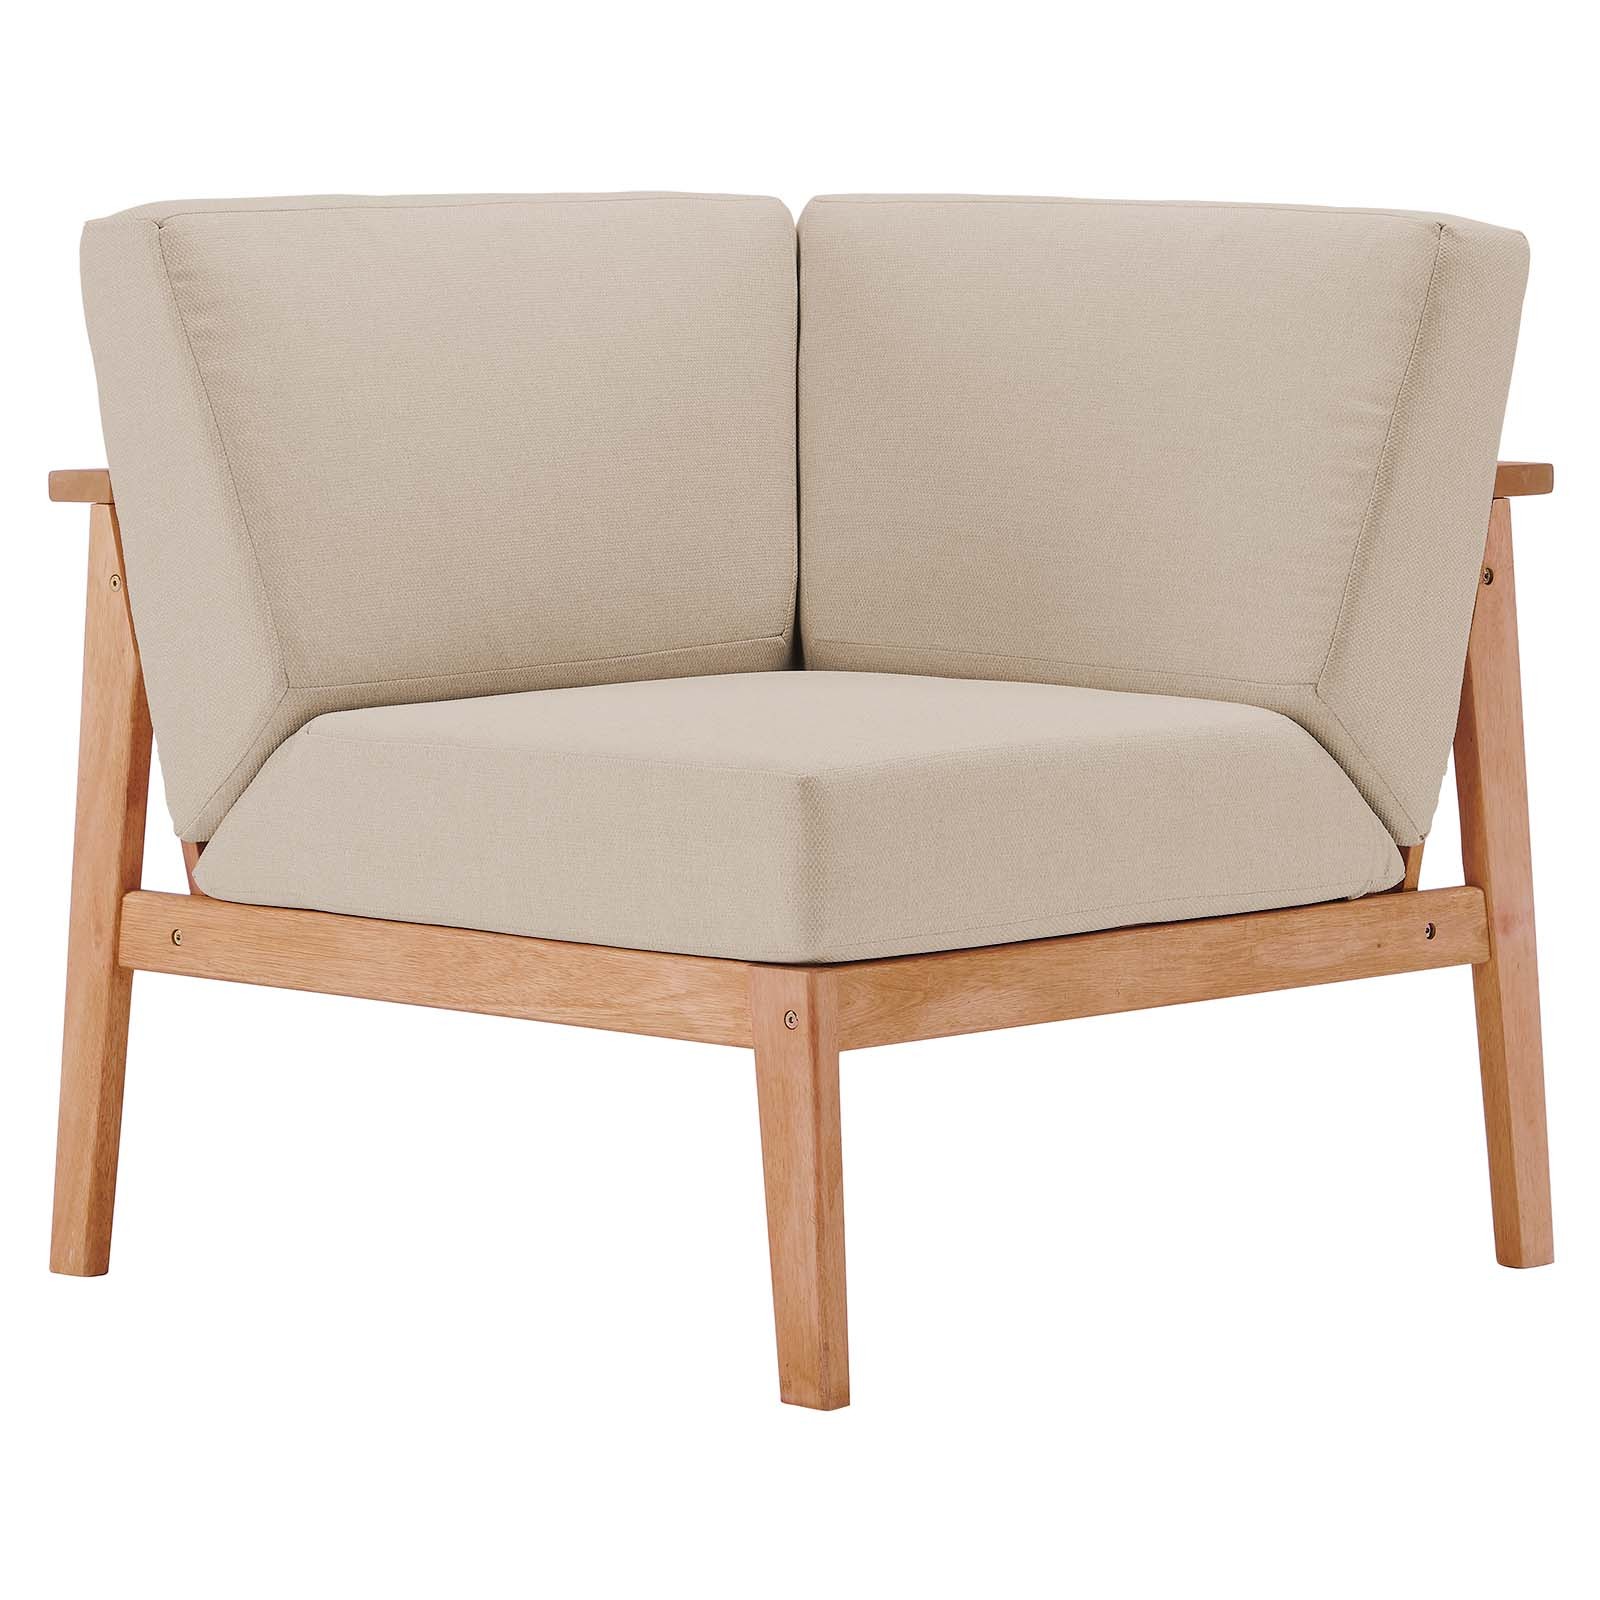 Sedona Outdoor Patio Eucalyptus Wood Sectional Sofa Corner Chair in Natural Taupe